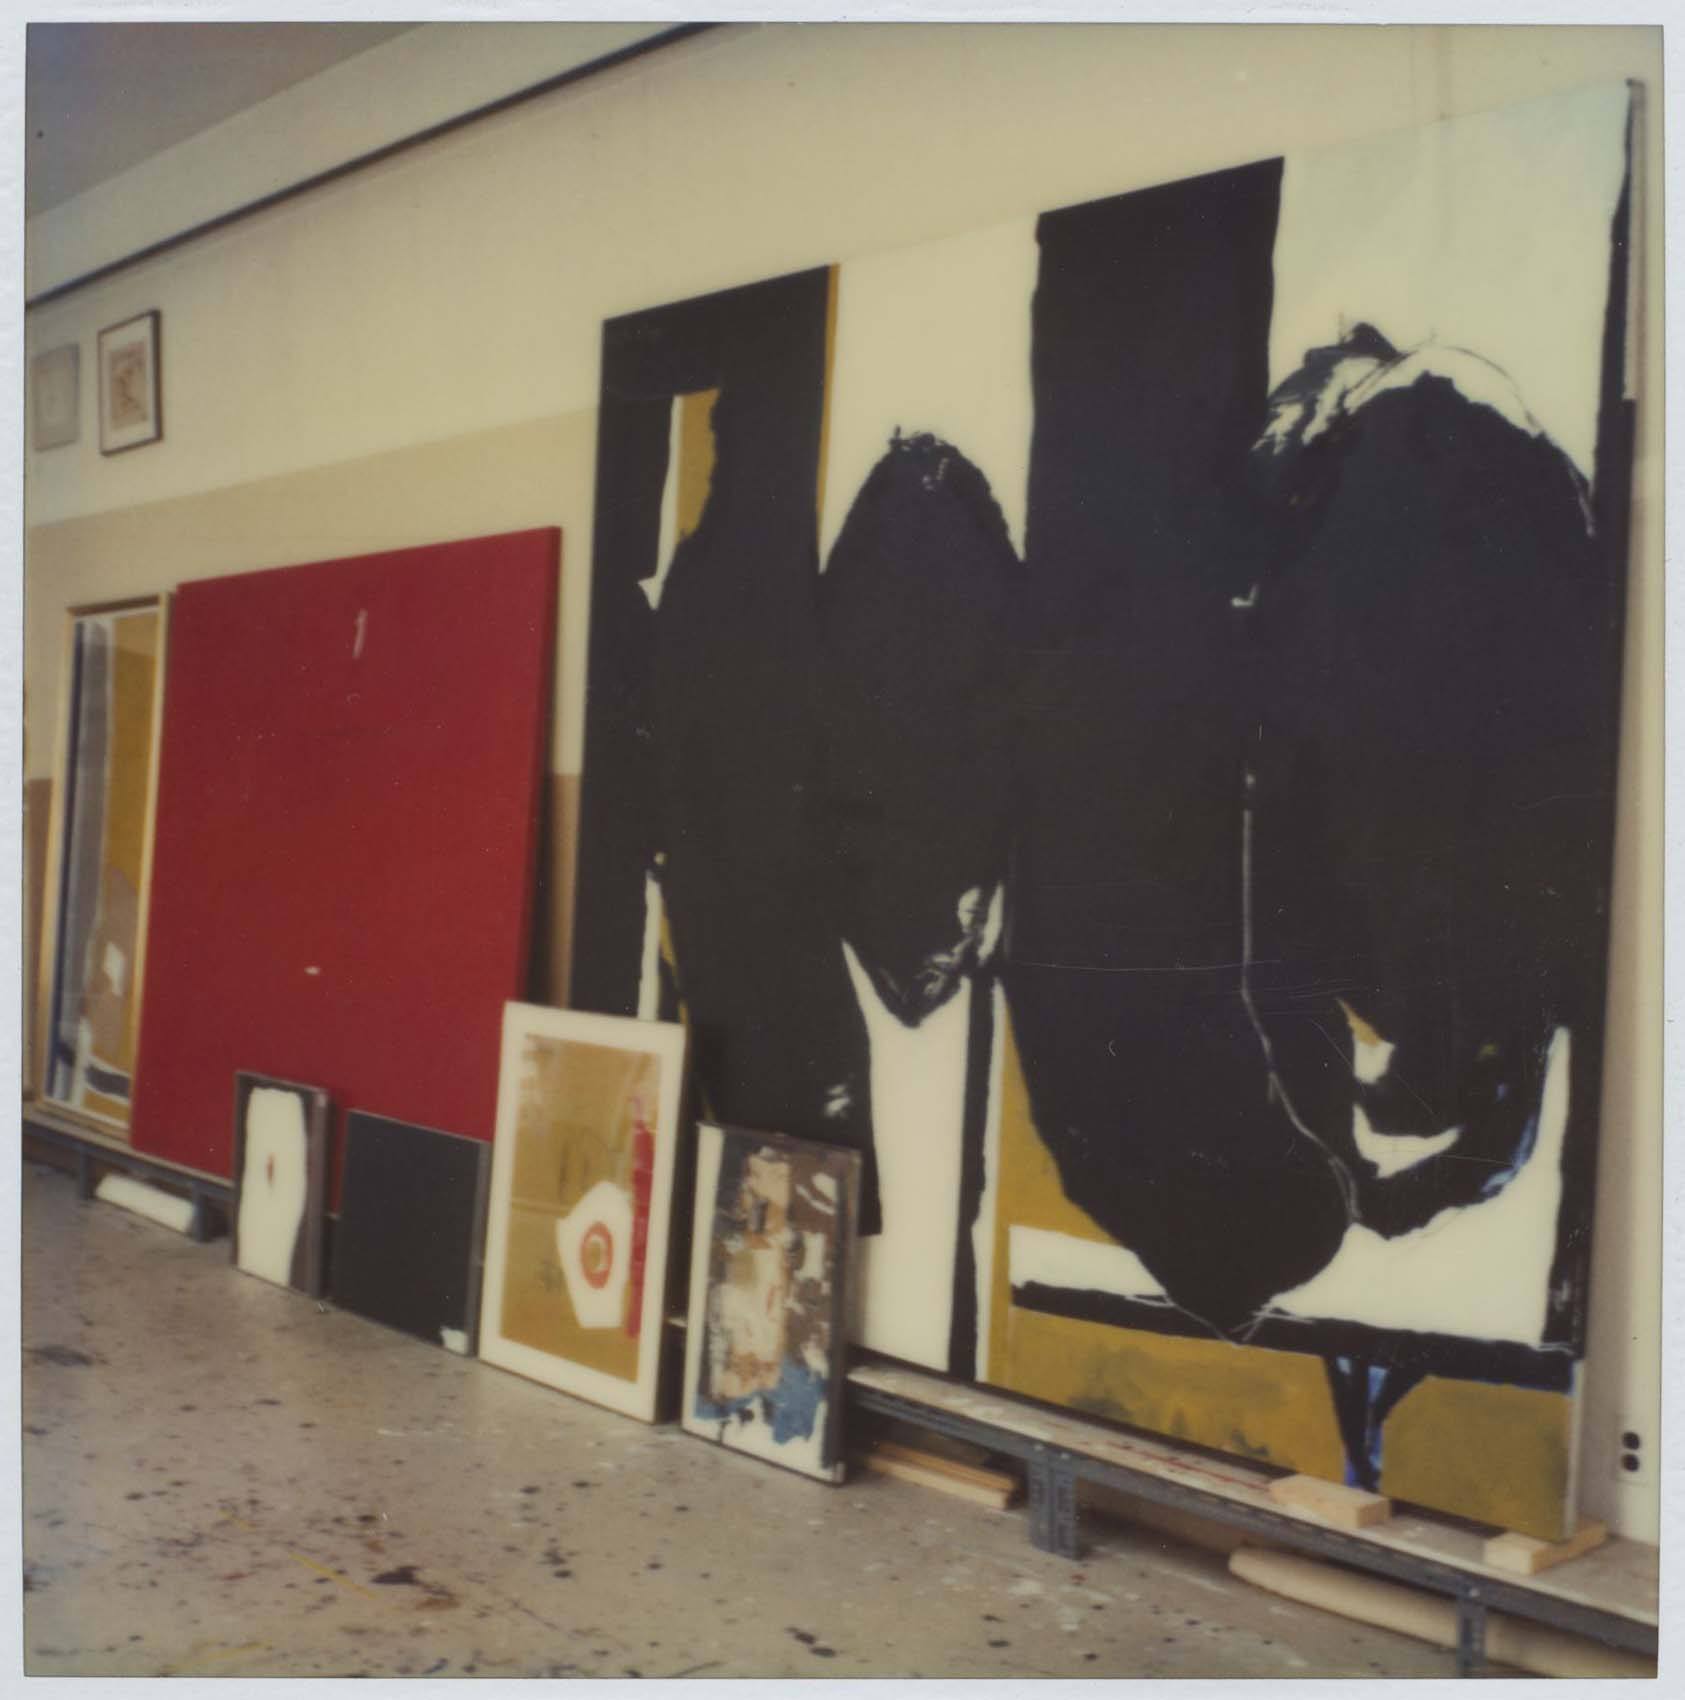 Motherwell’s Greenwich studio showing selections of work intended for the “Motherwell Room” at the Bayerische Staatsgemäldsammlungen, Munich, 1982